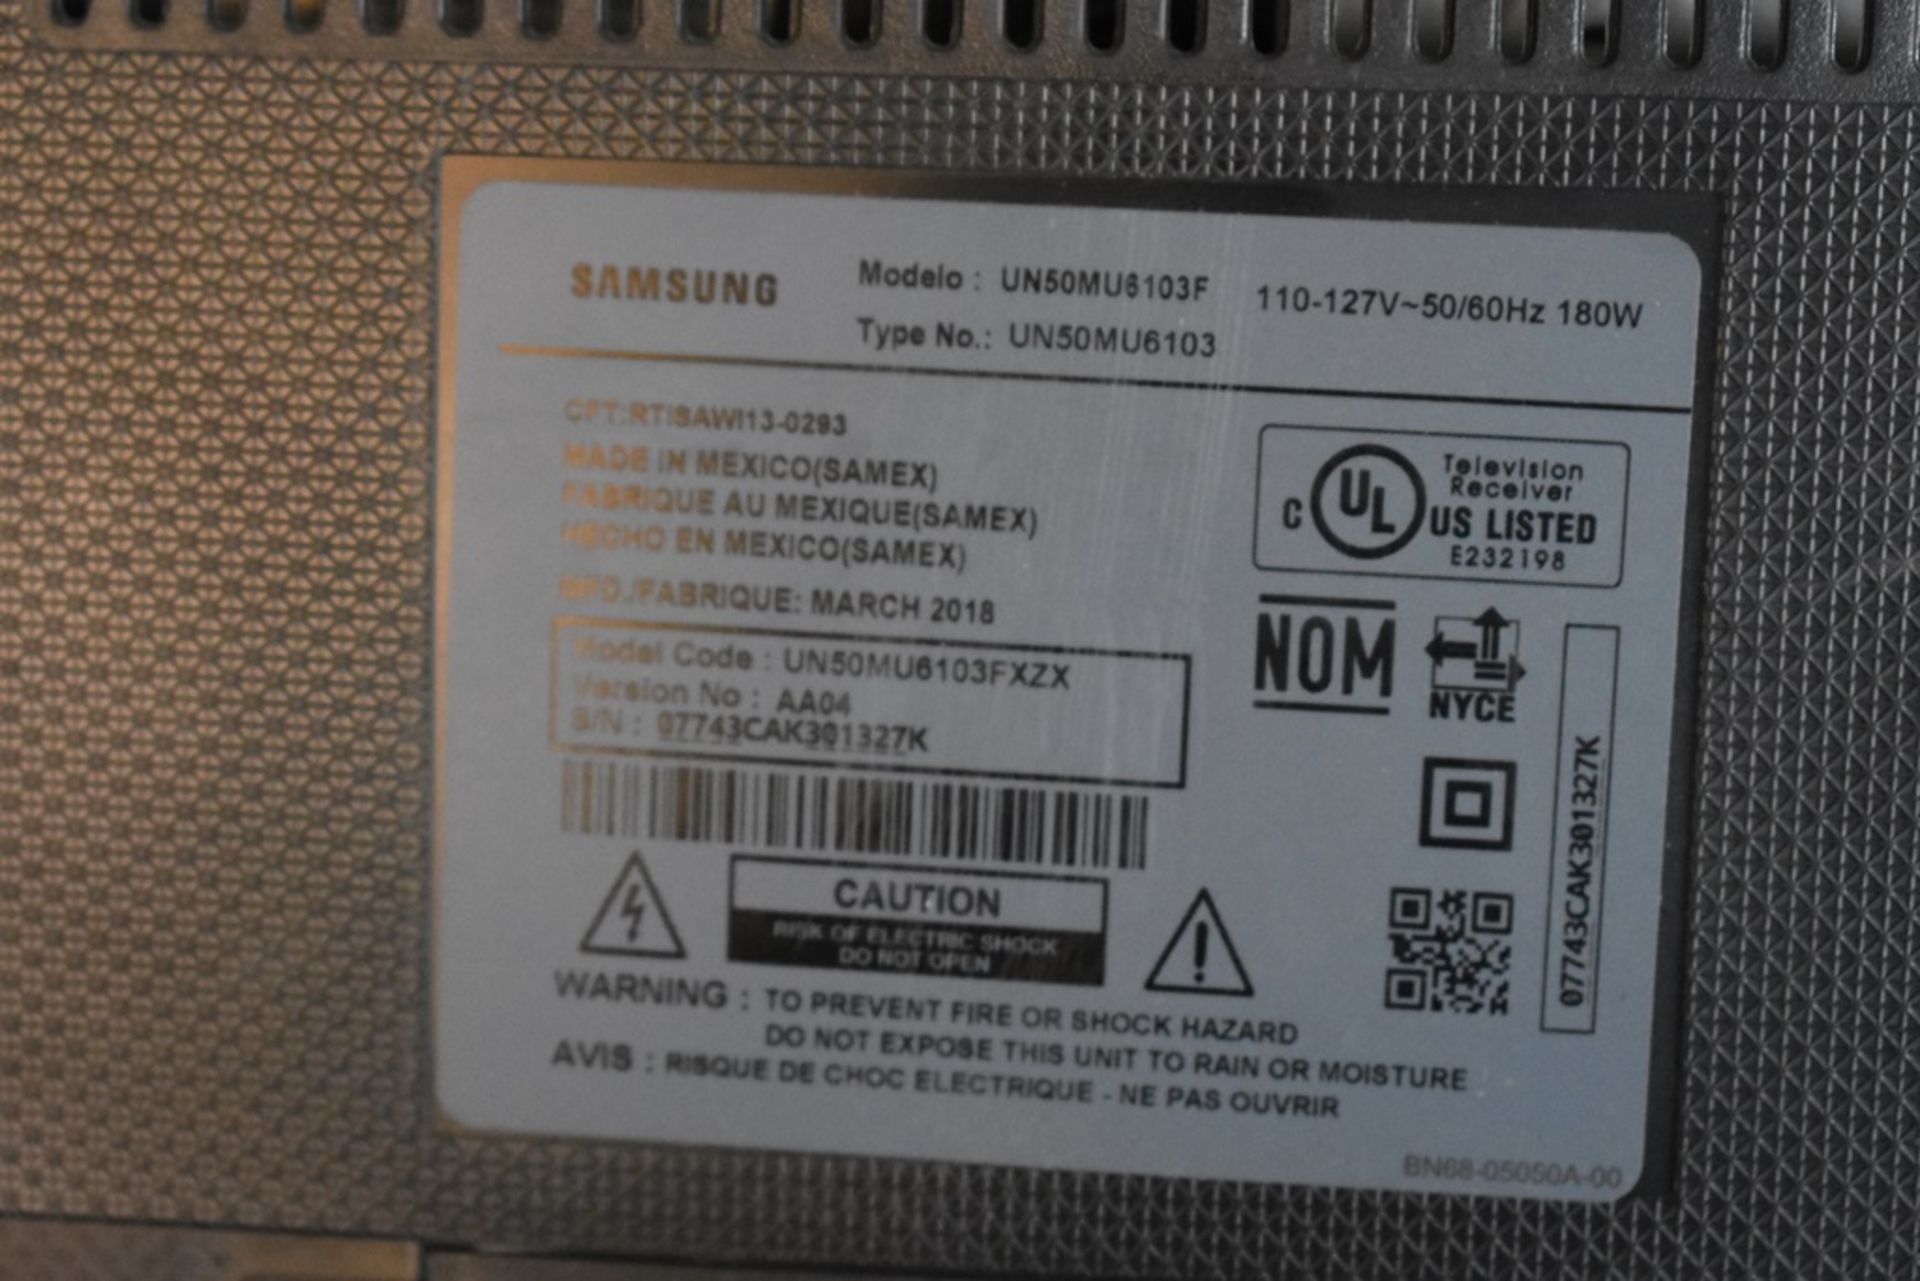 Pantalla Full HD de 50 pulgadas marca Samsung, Modelo: UN50MU6103F, Serie: 07743CAK301327K - Image 6 of 7